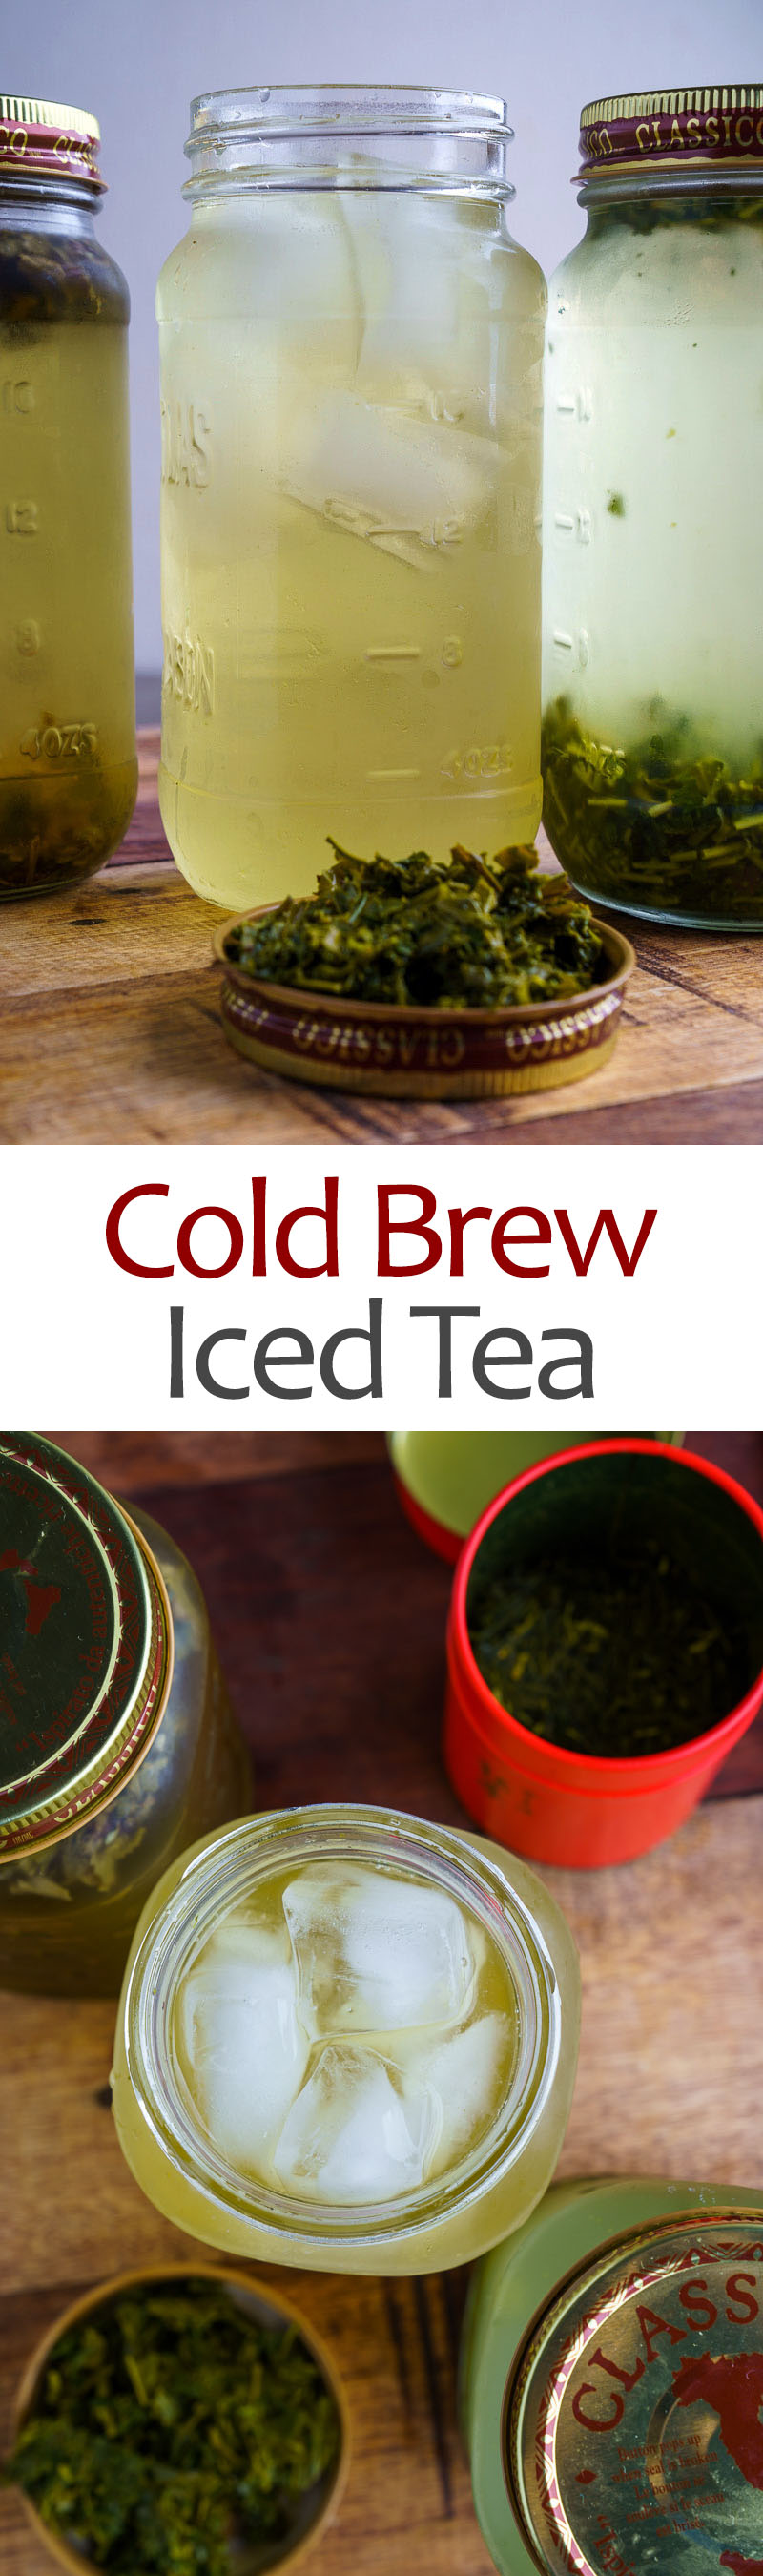 Cold Brewed Iced Tea